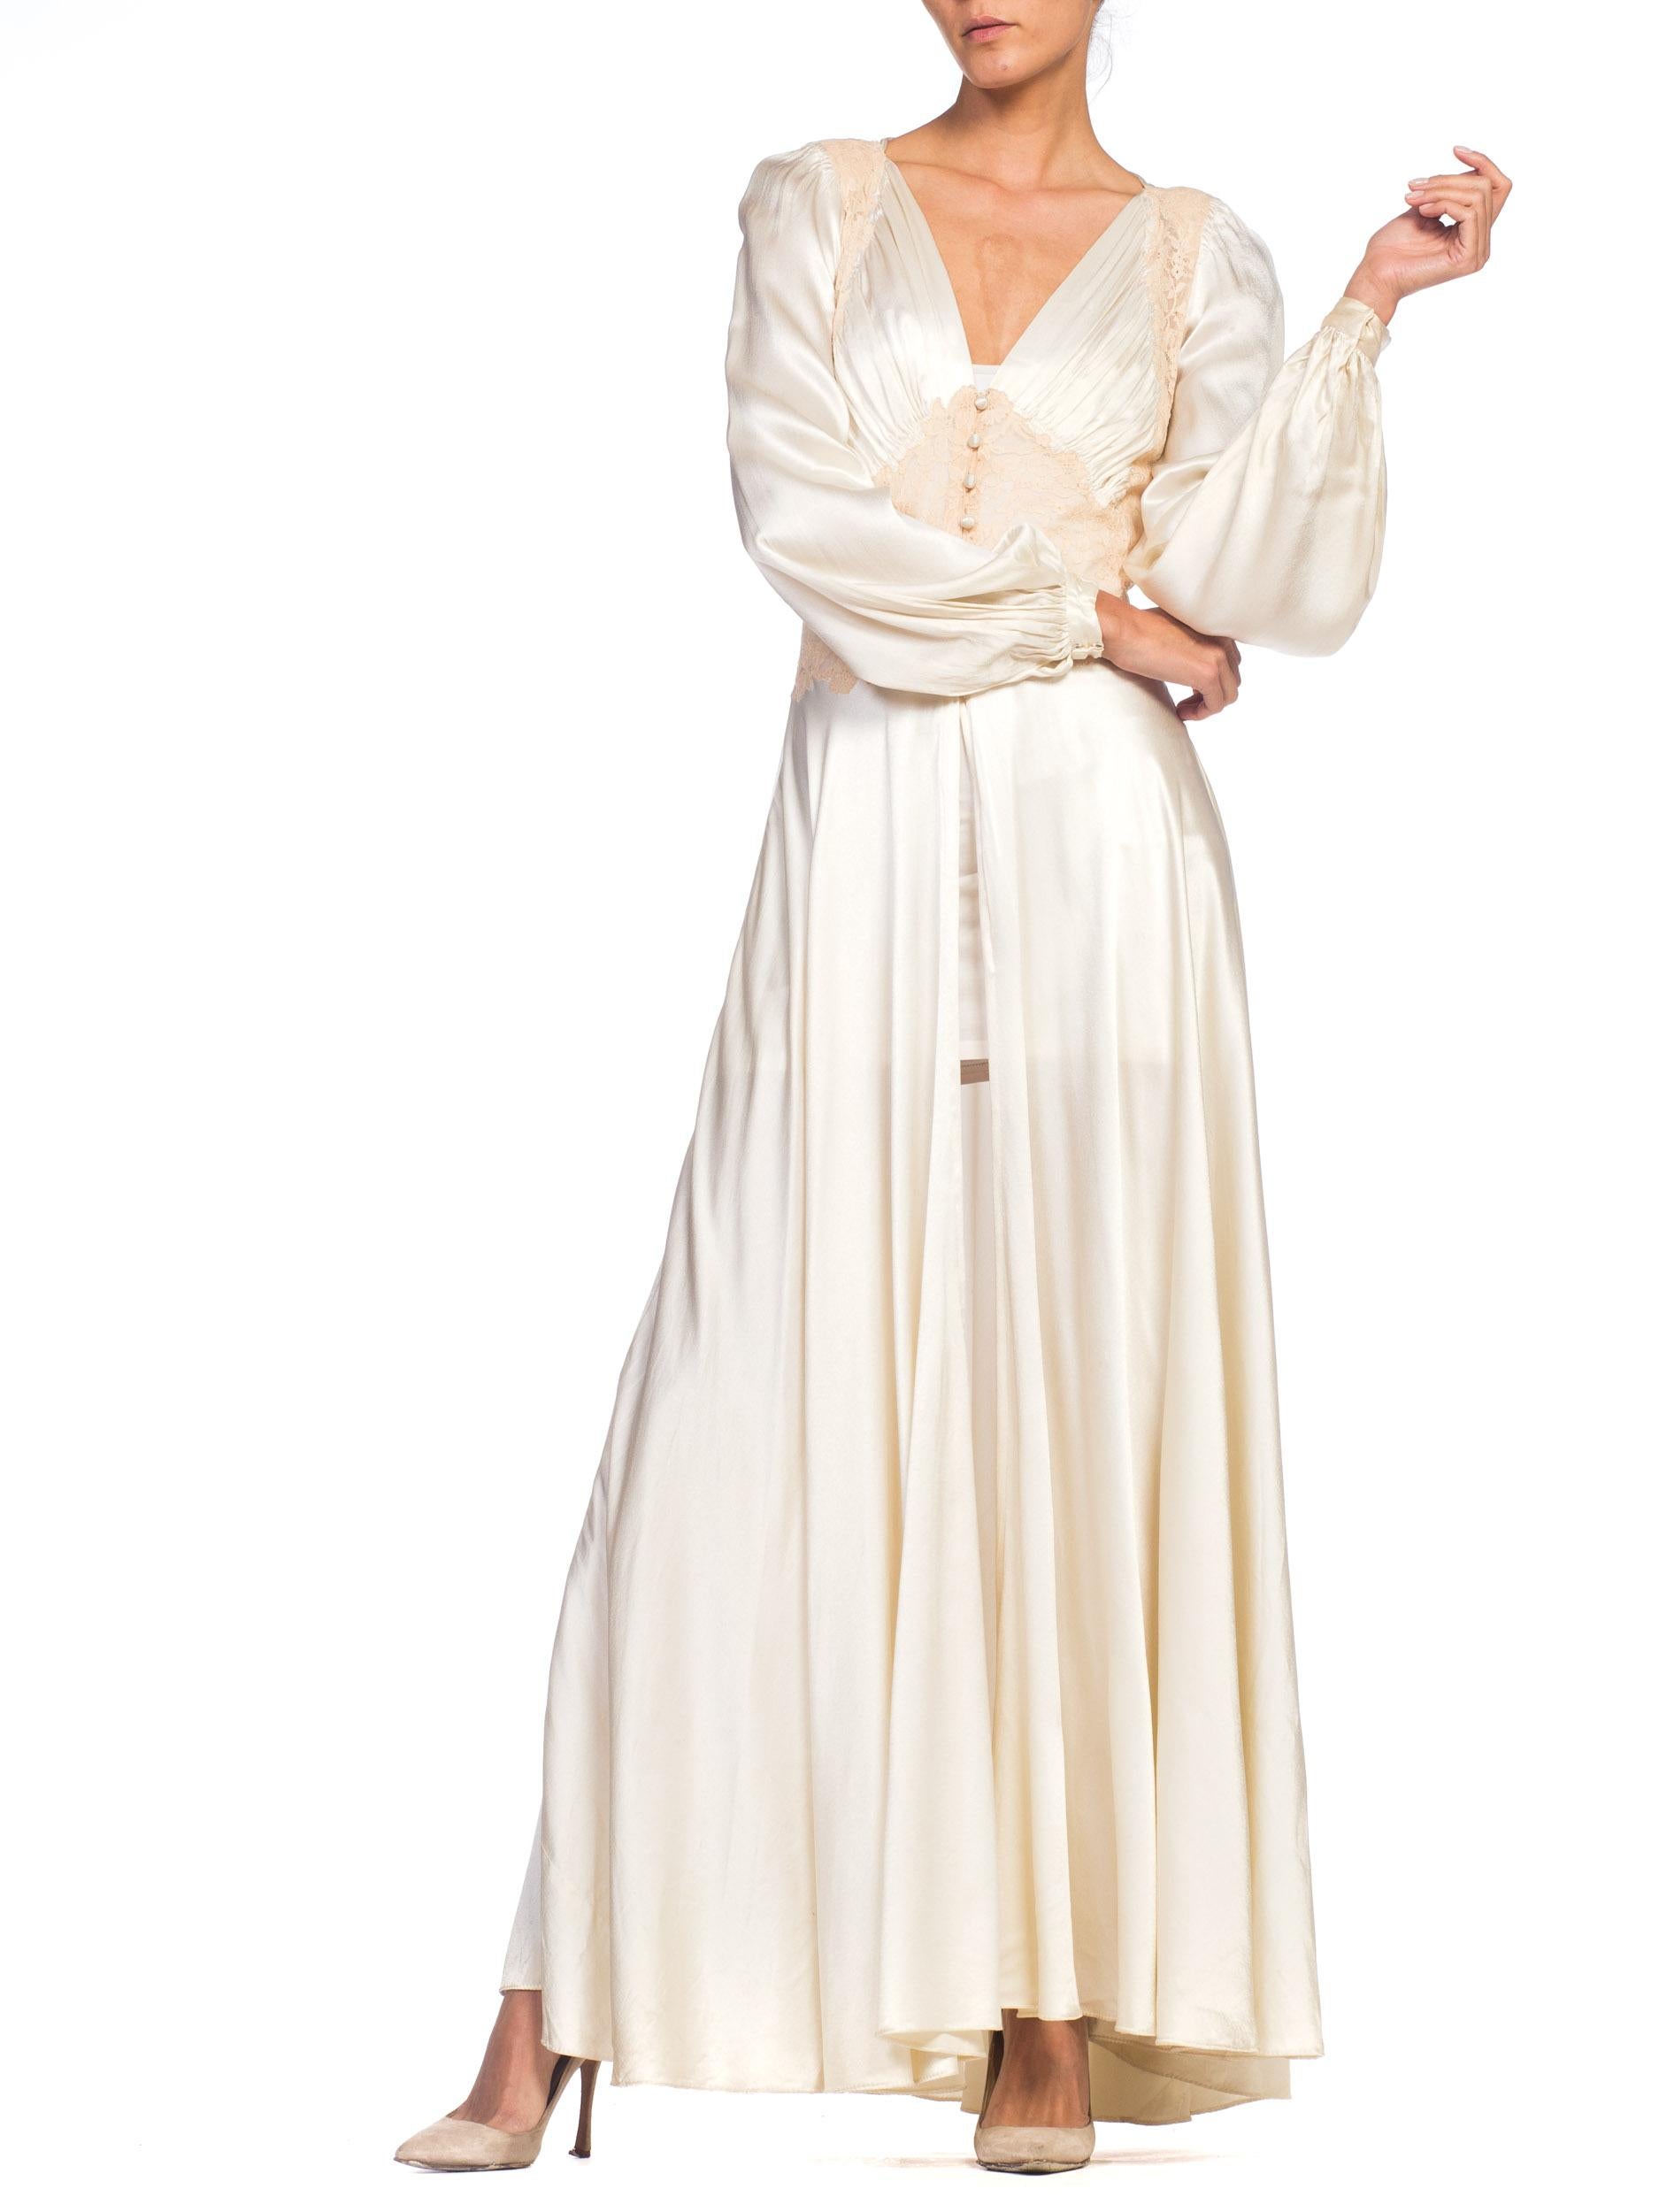 1930s 1940s Satin & Lace Negligee Slip Dress Robe  3